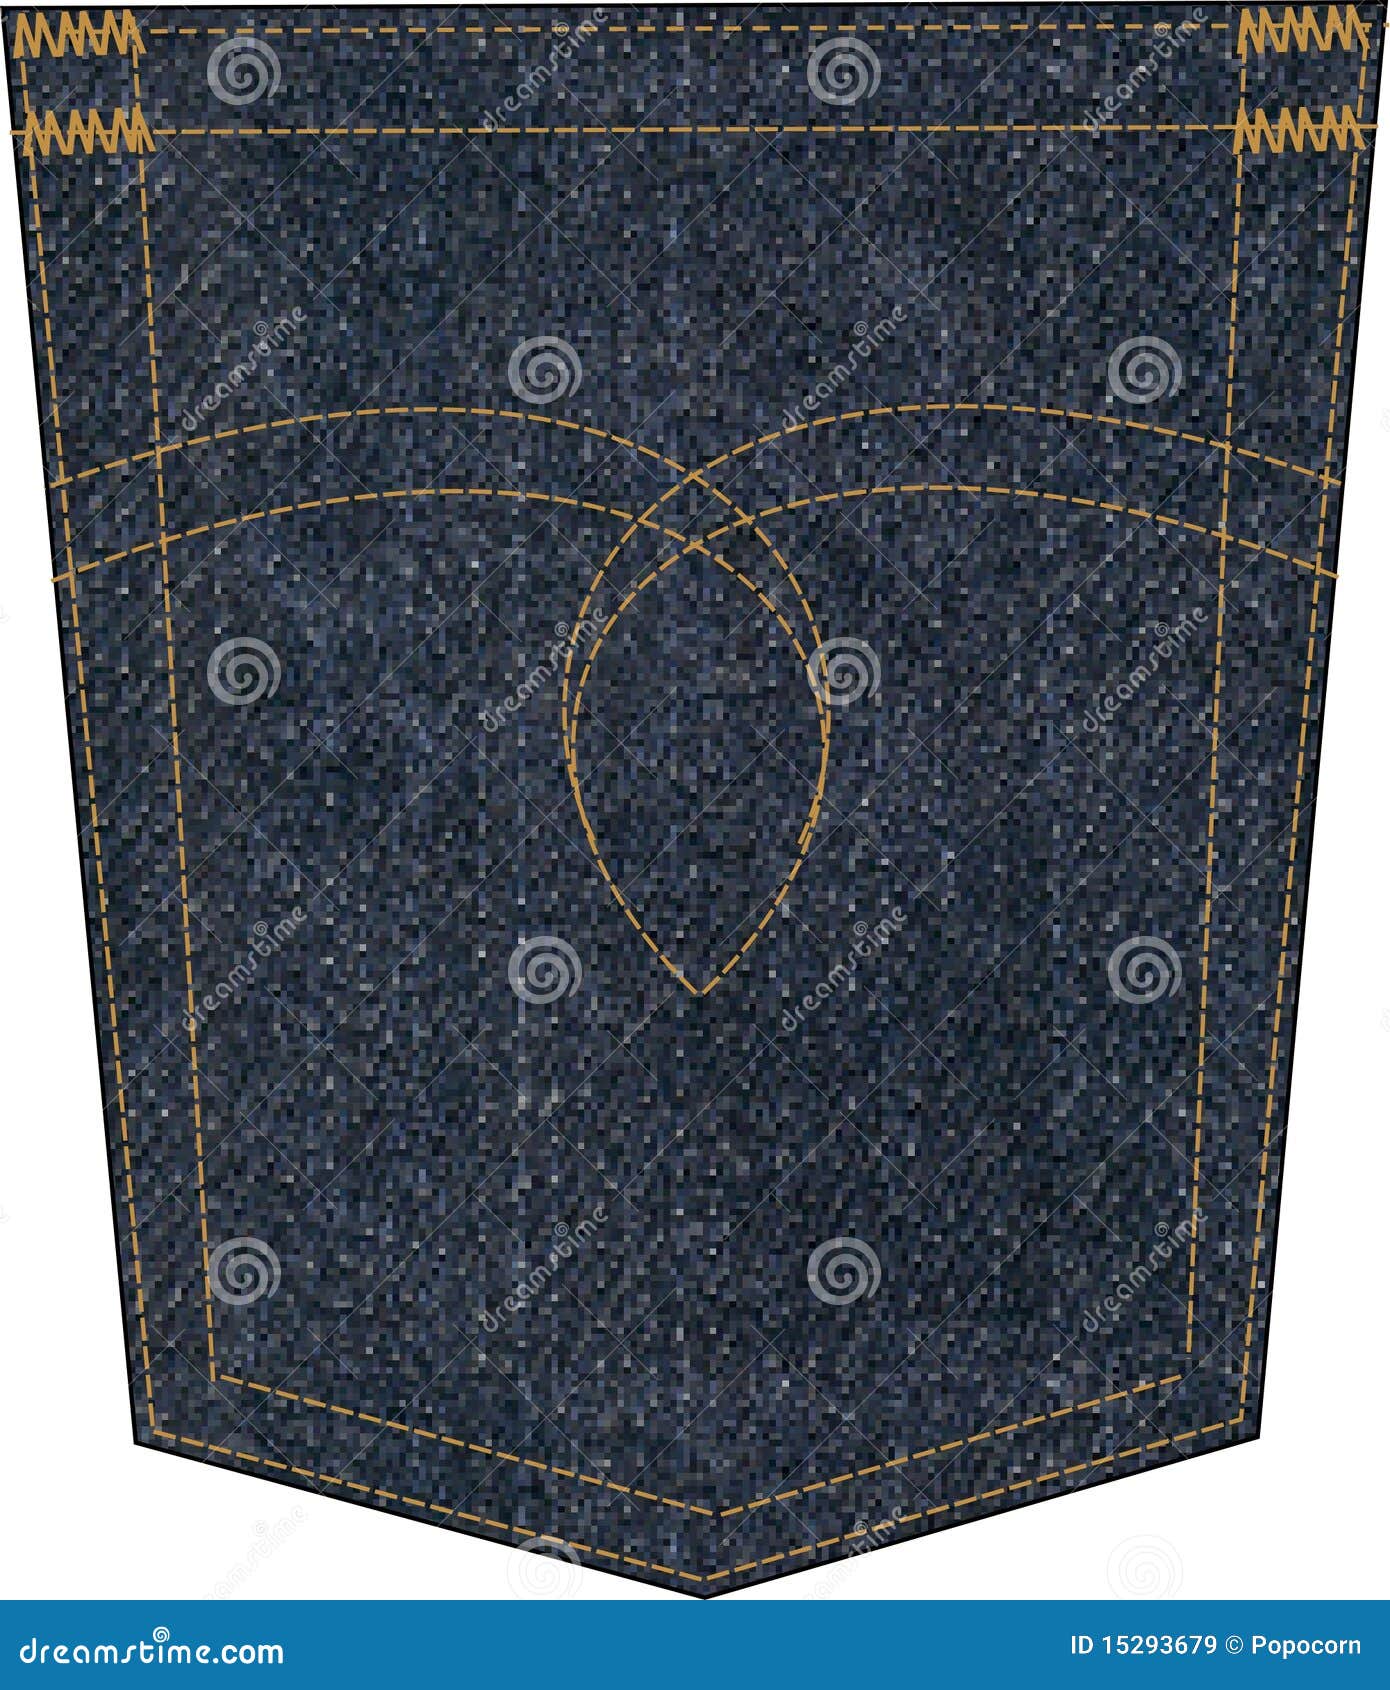 Denim back pocket stock illustration. Illustration of denim - 15293679